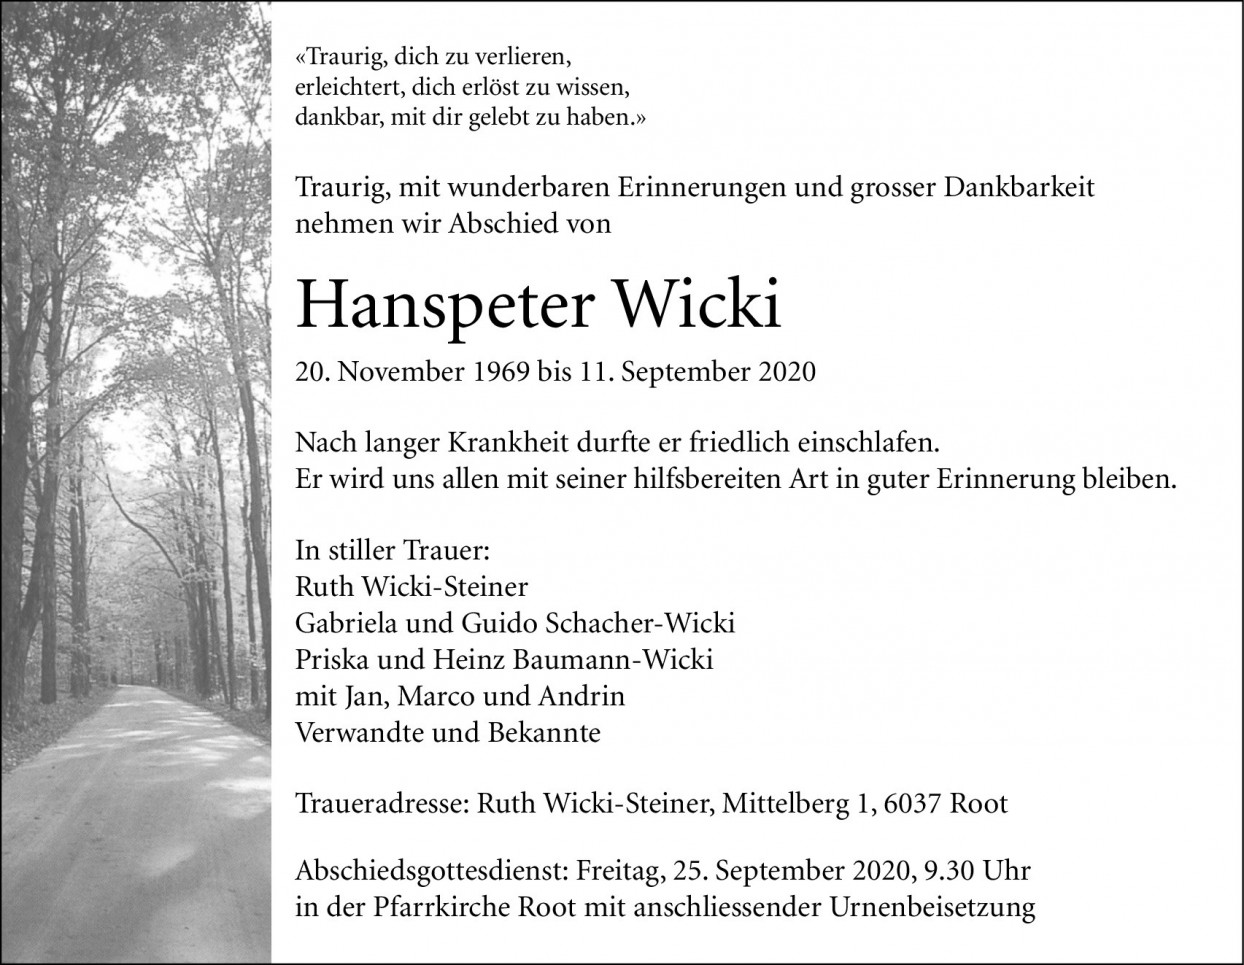 Hanspeter Wicki